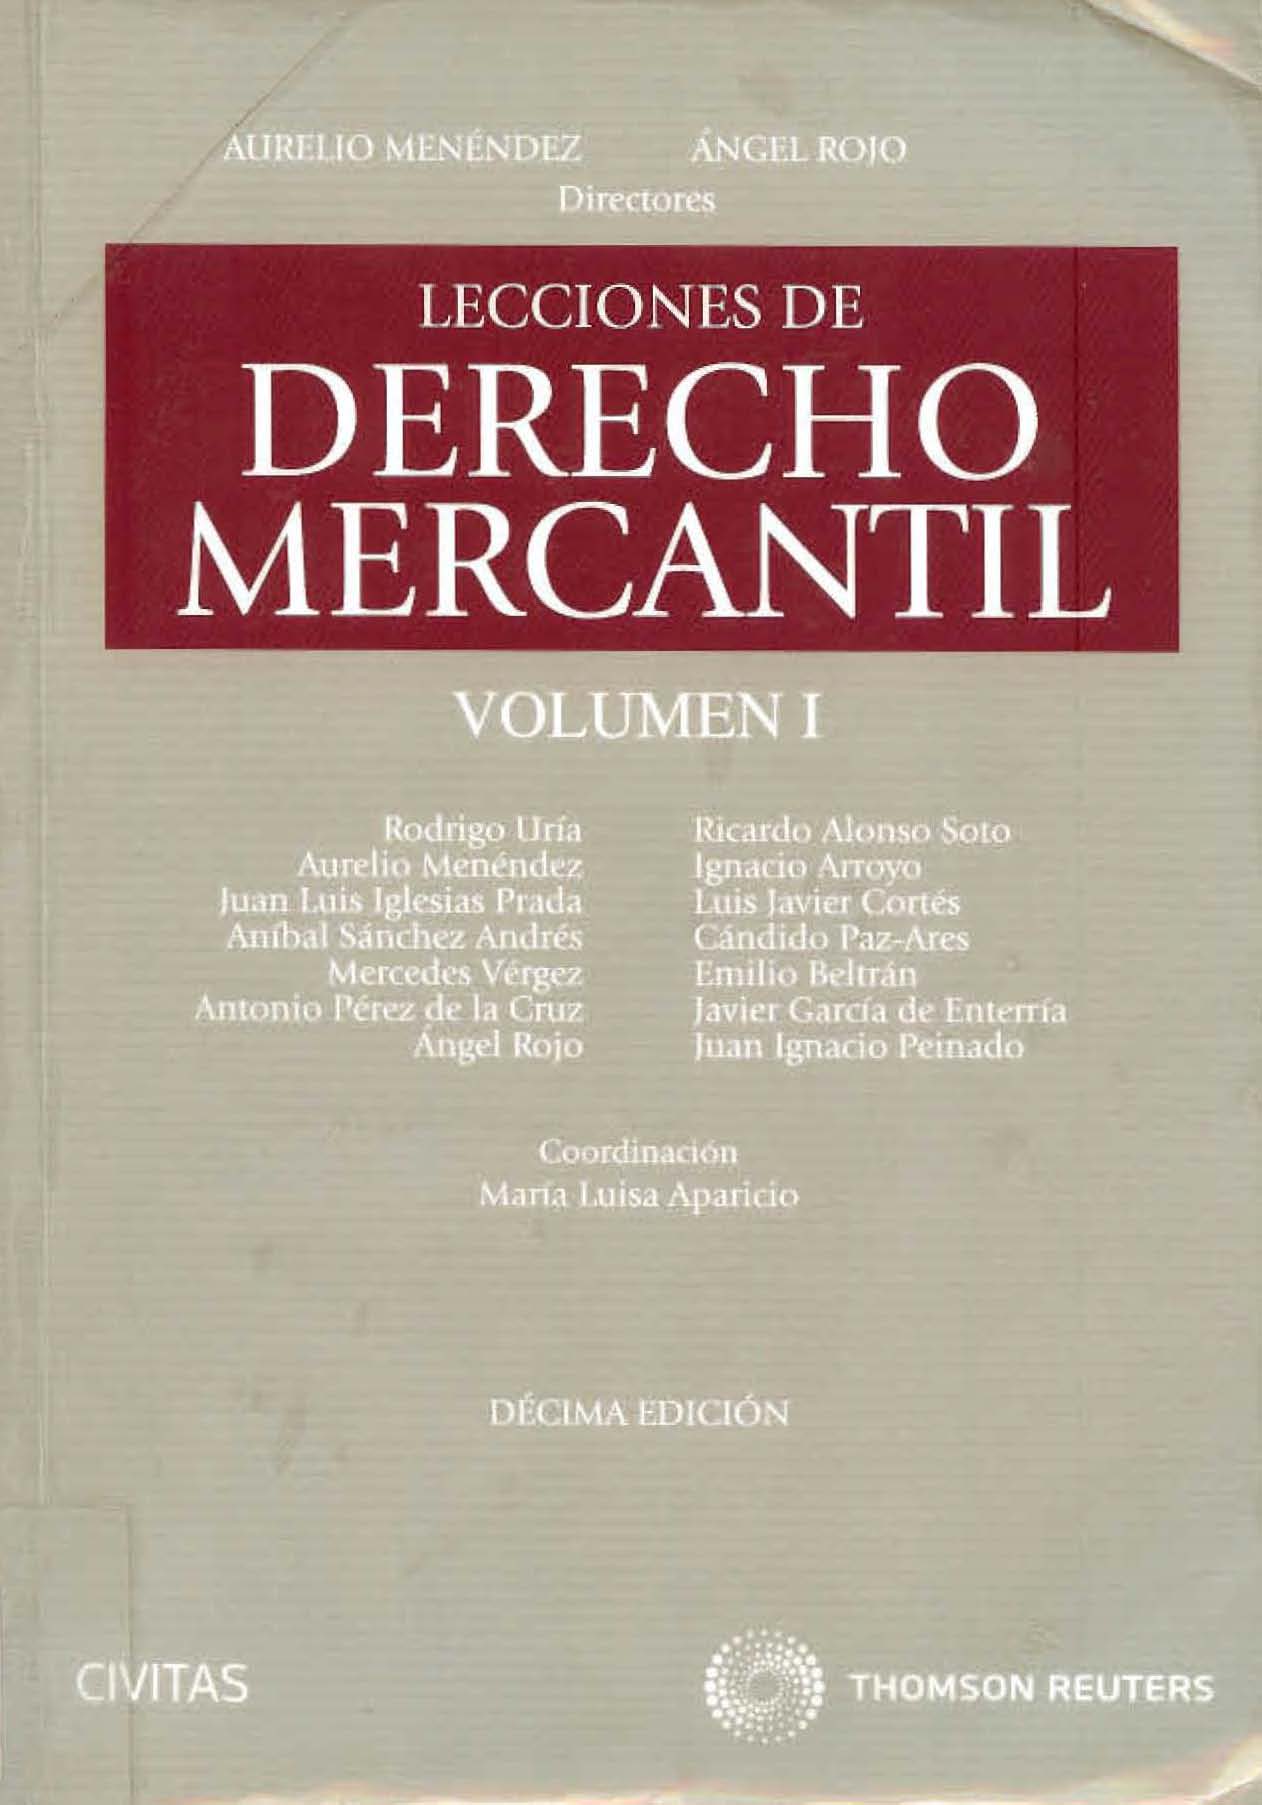 Lecciones de derecho mercantil: Volumen I - Dialnet